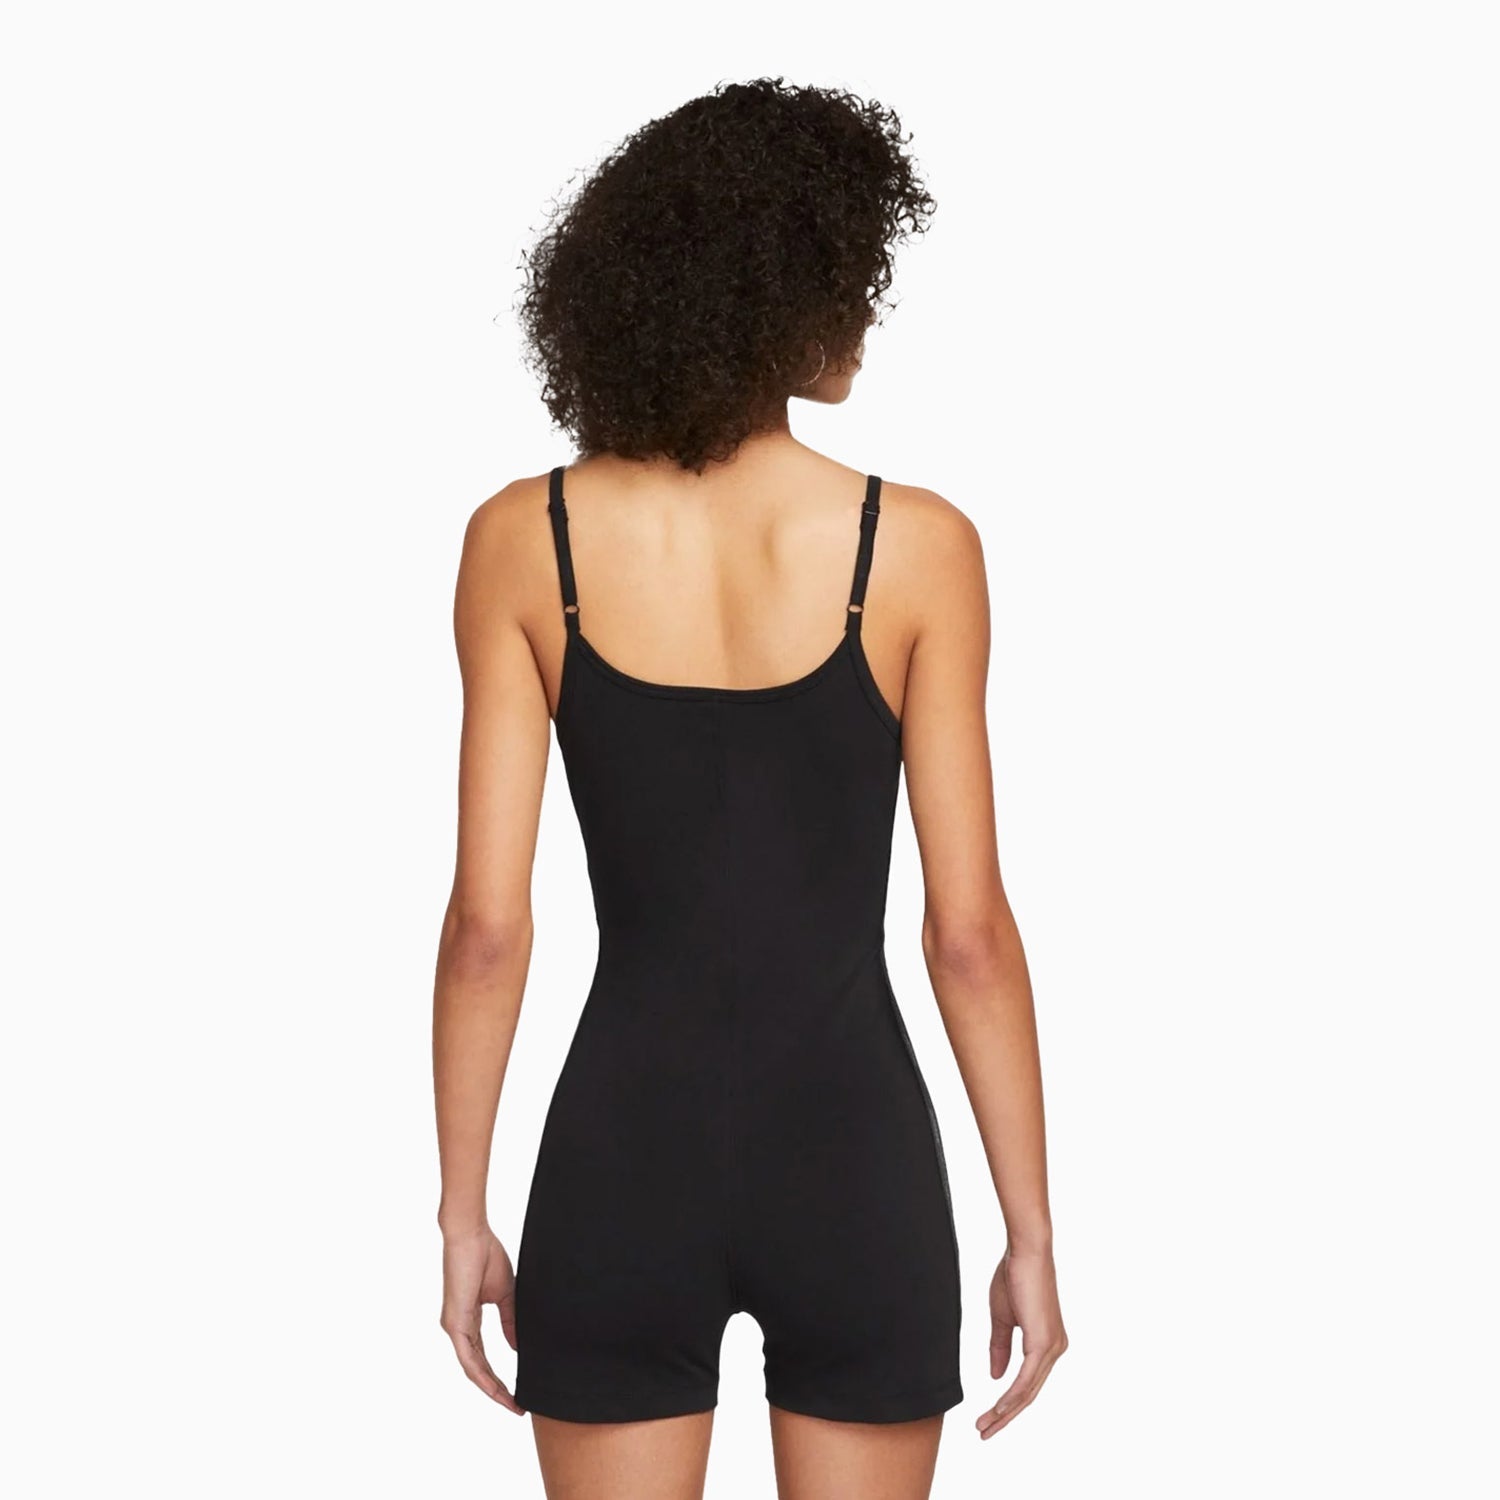 nike-womens-sportswear-1-piece-bodysuit-dv0325-010